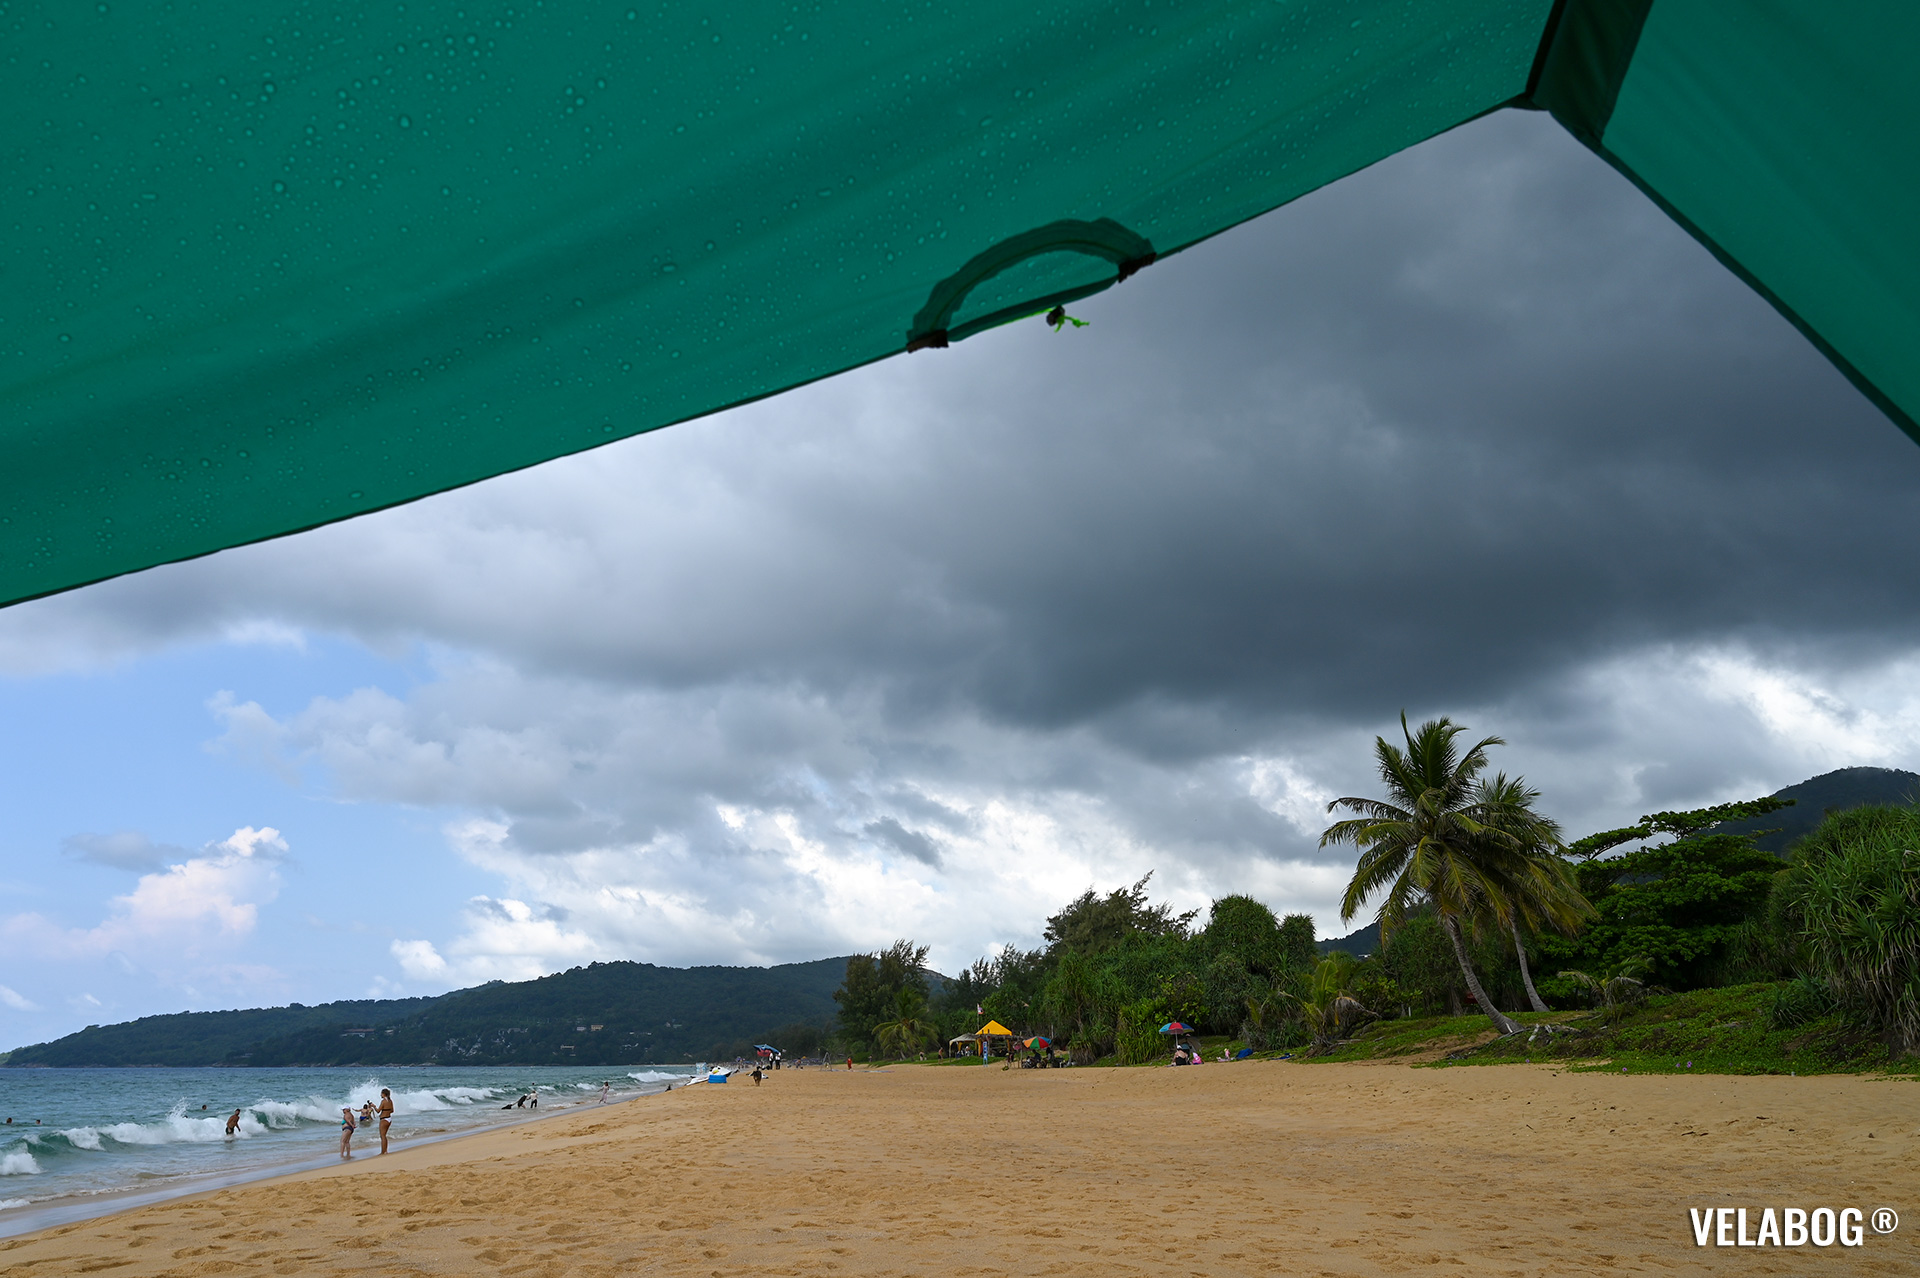 Beach sun sail Velabog Breeze, green. Best shelter on the beach also by rain, best beach canopy tent. Setup option for no, light or gusty wind. Bottom view. Details.